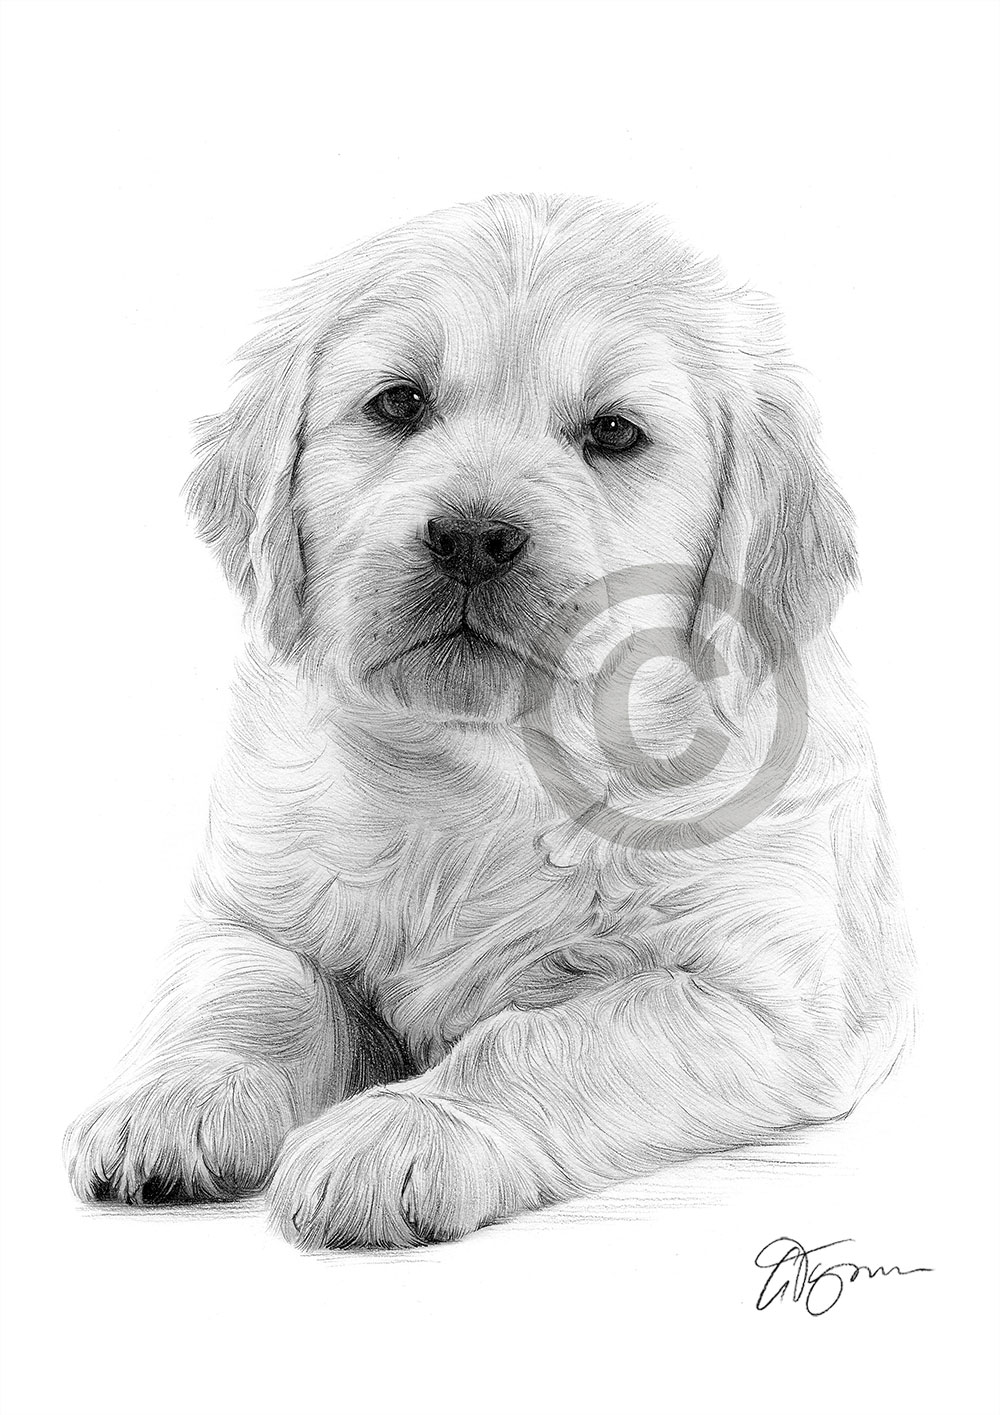 Pencil drawing of a Golden Retriever puppy by UK artist Gary Tymon